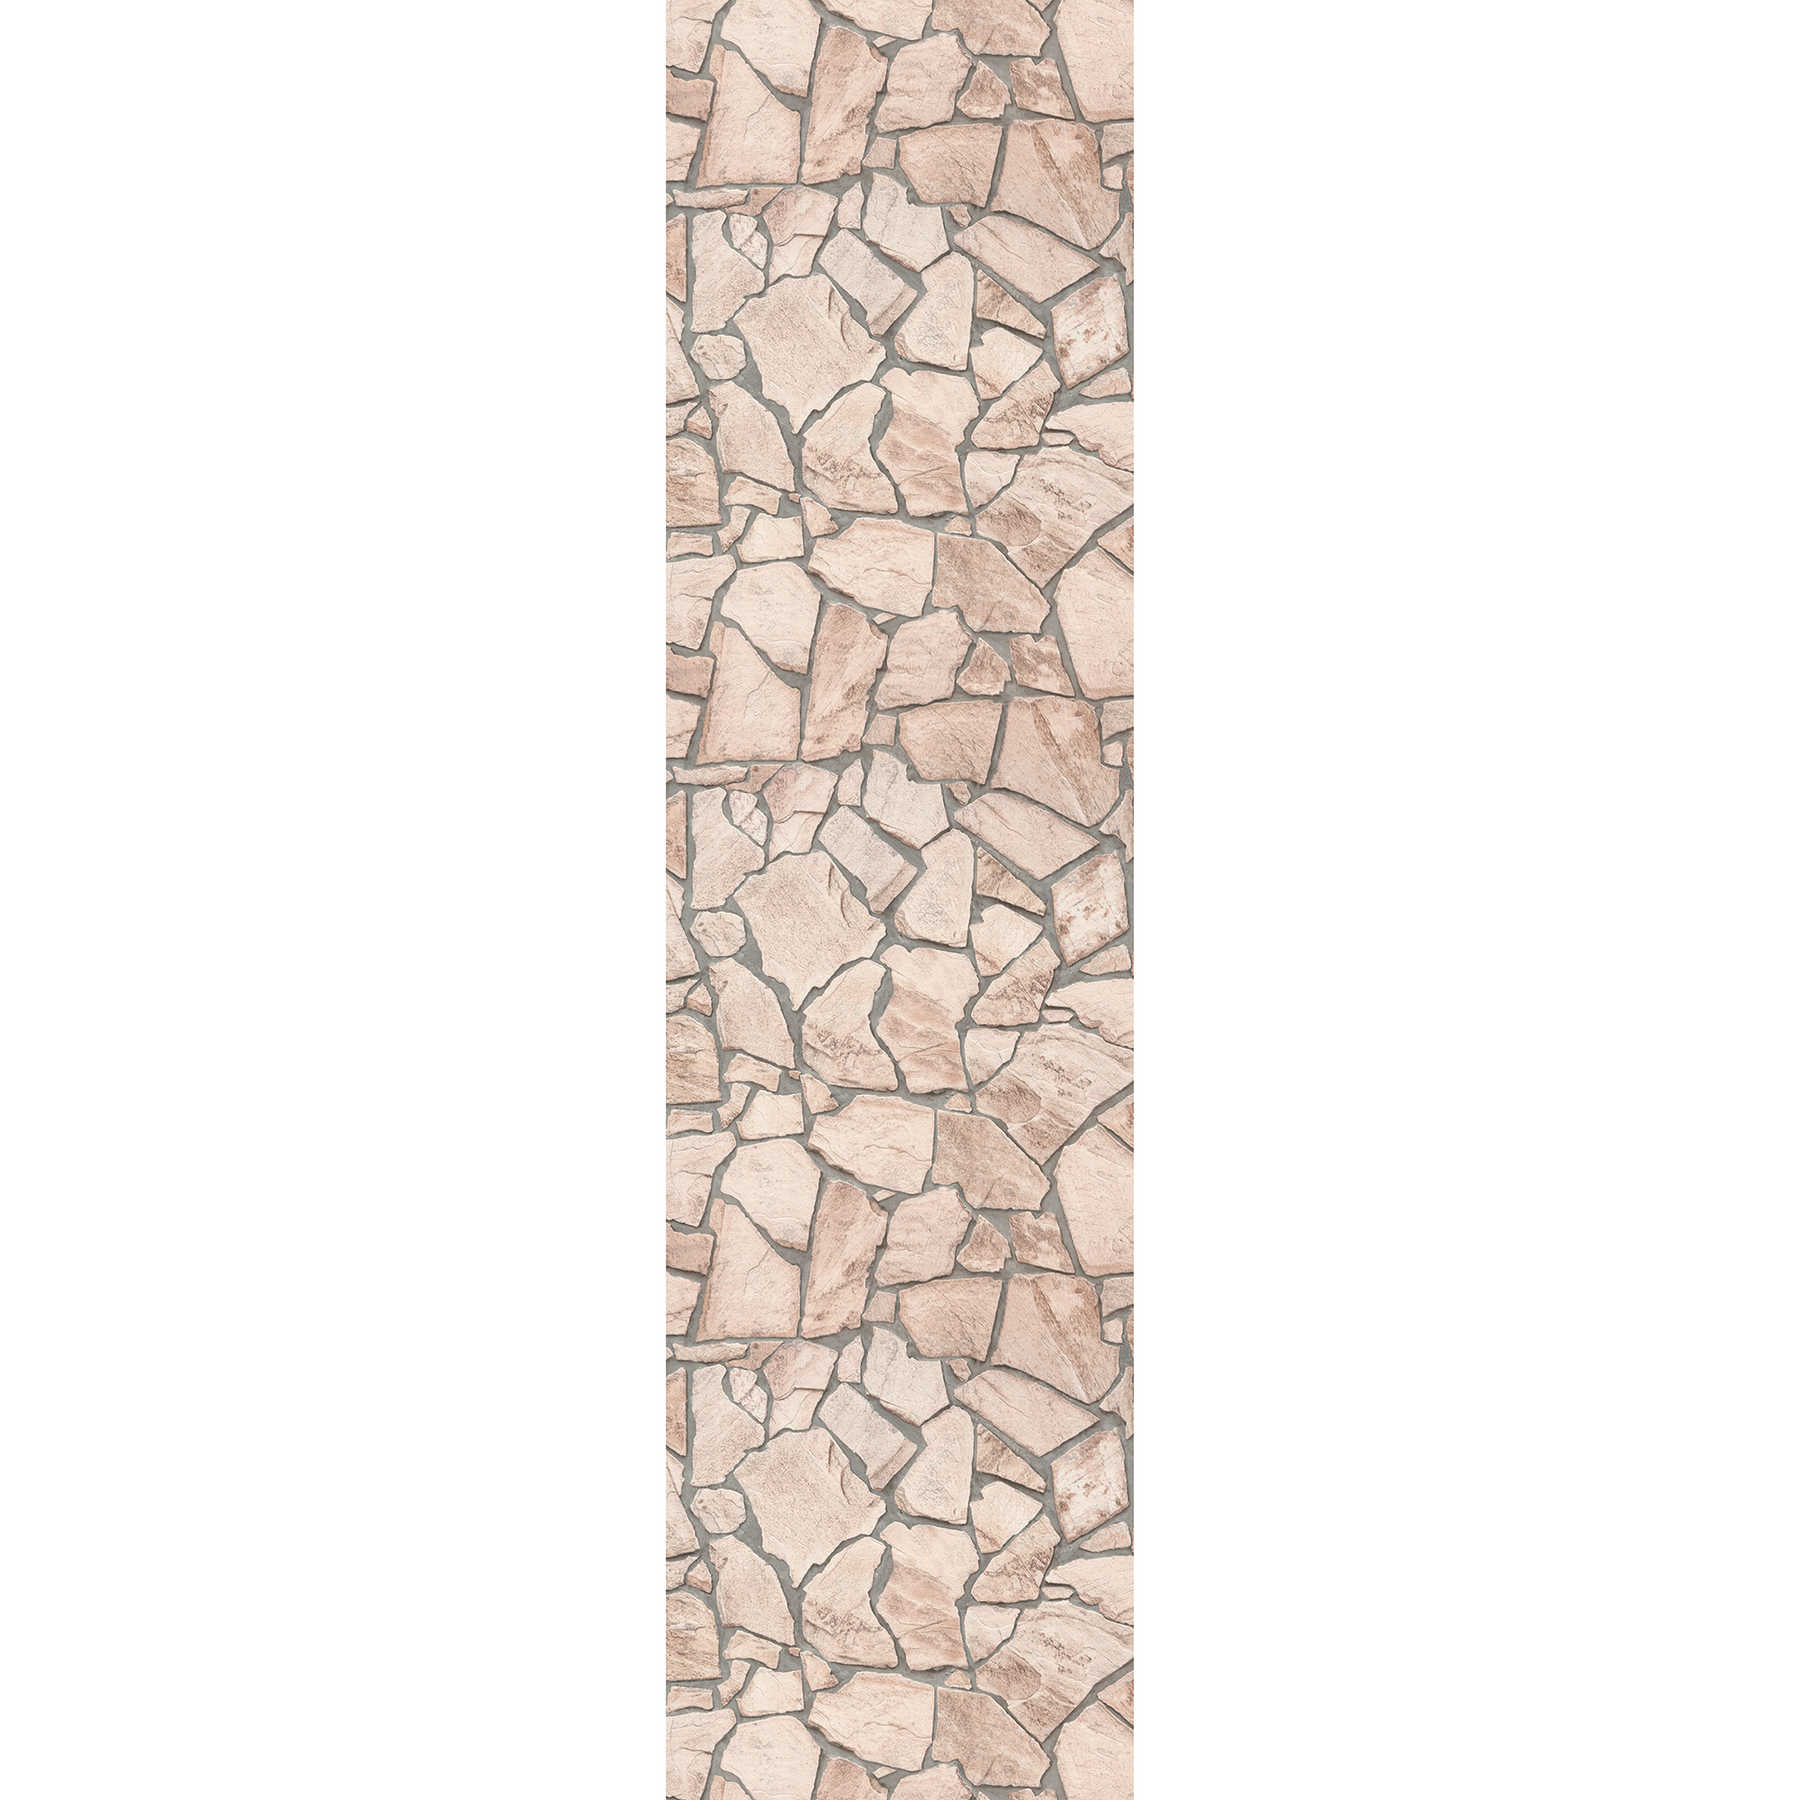         Stone look wallpaper with natural stone masonry - cream
    